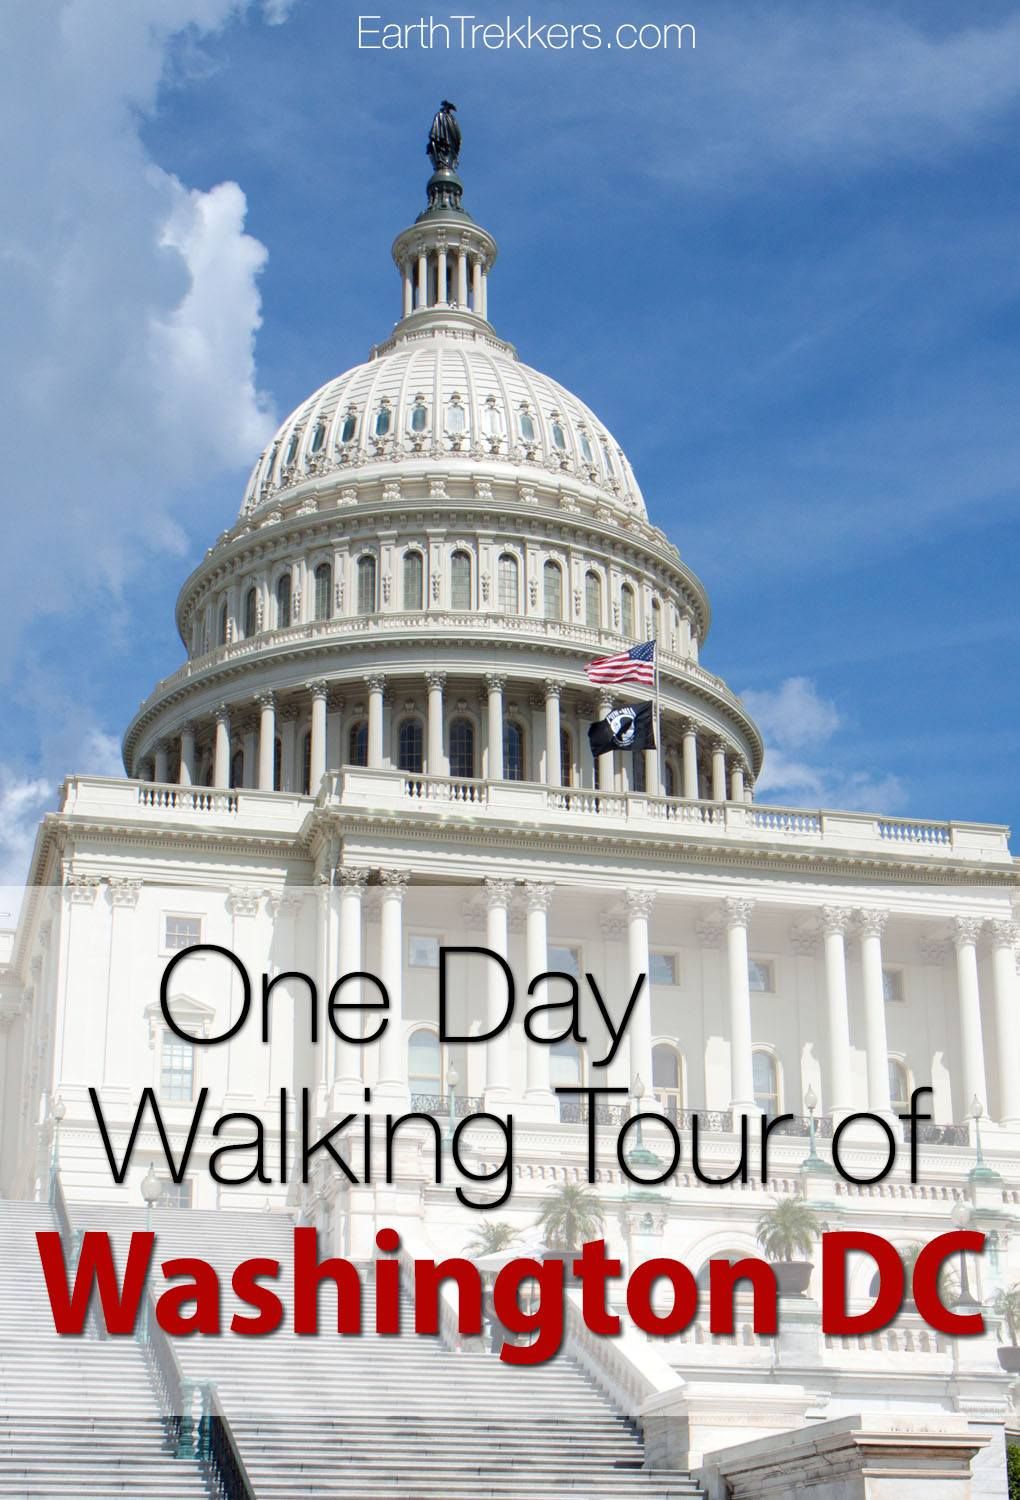 Washington DC One Day Walking Tour